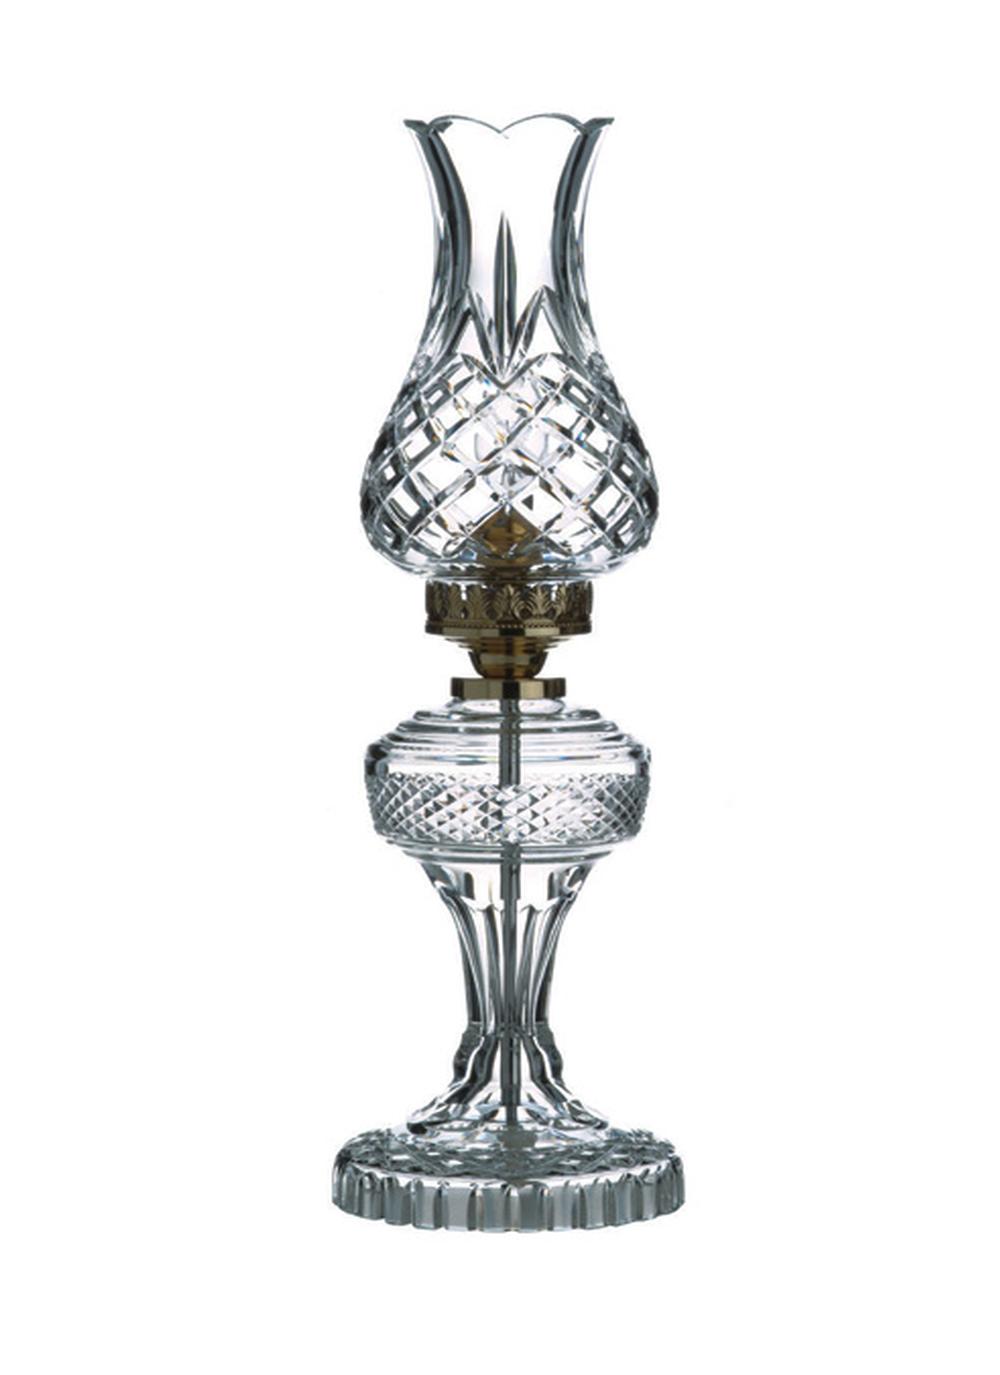 Waterford Crystal Inishturk Lamp.